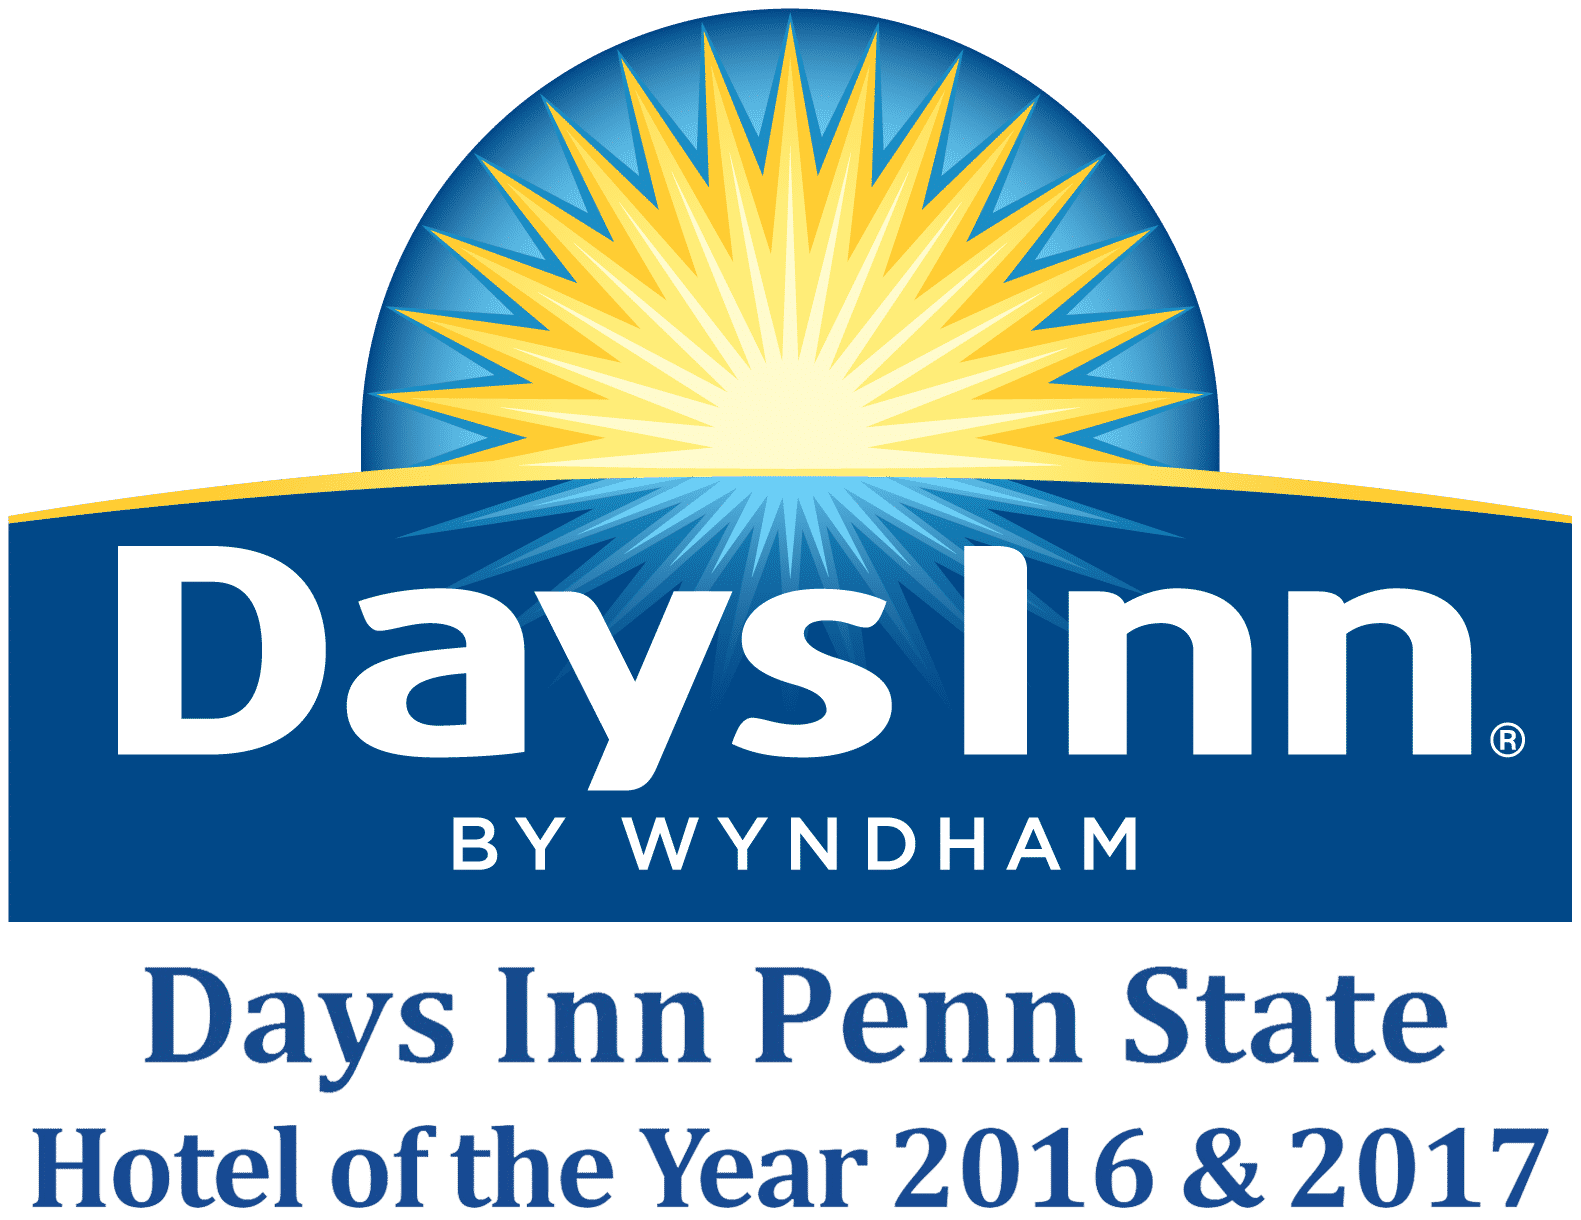 Days Inn Logo - Days Inn Penn State, State College, PA Country Lodging